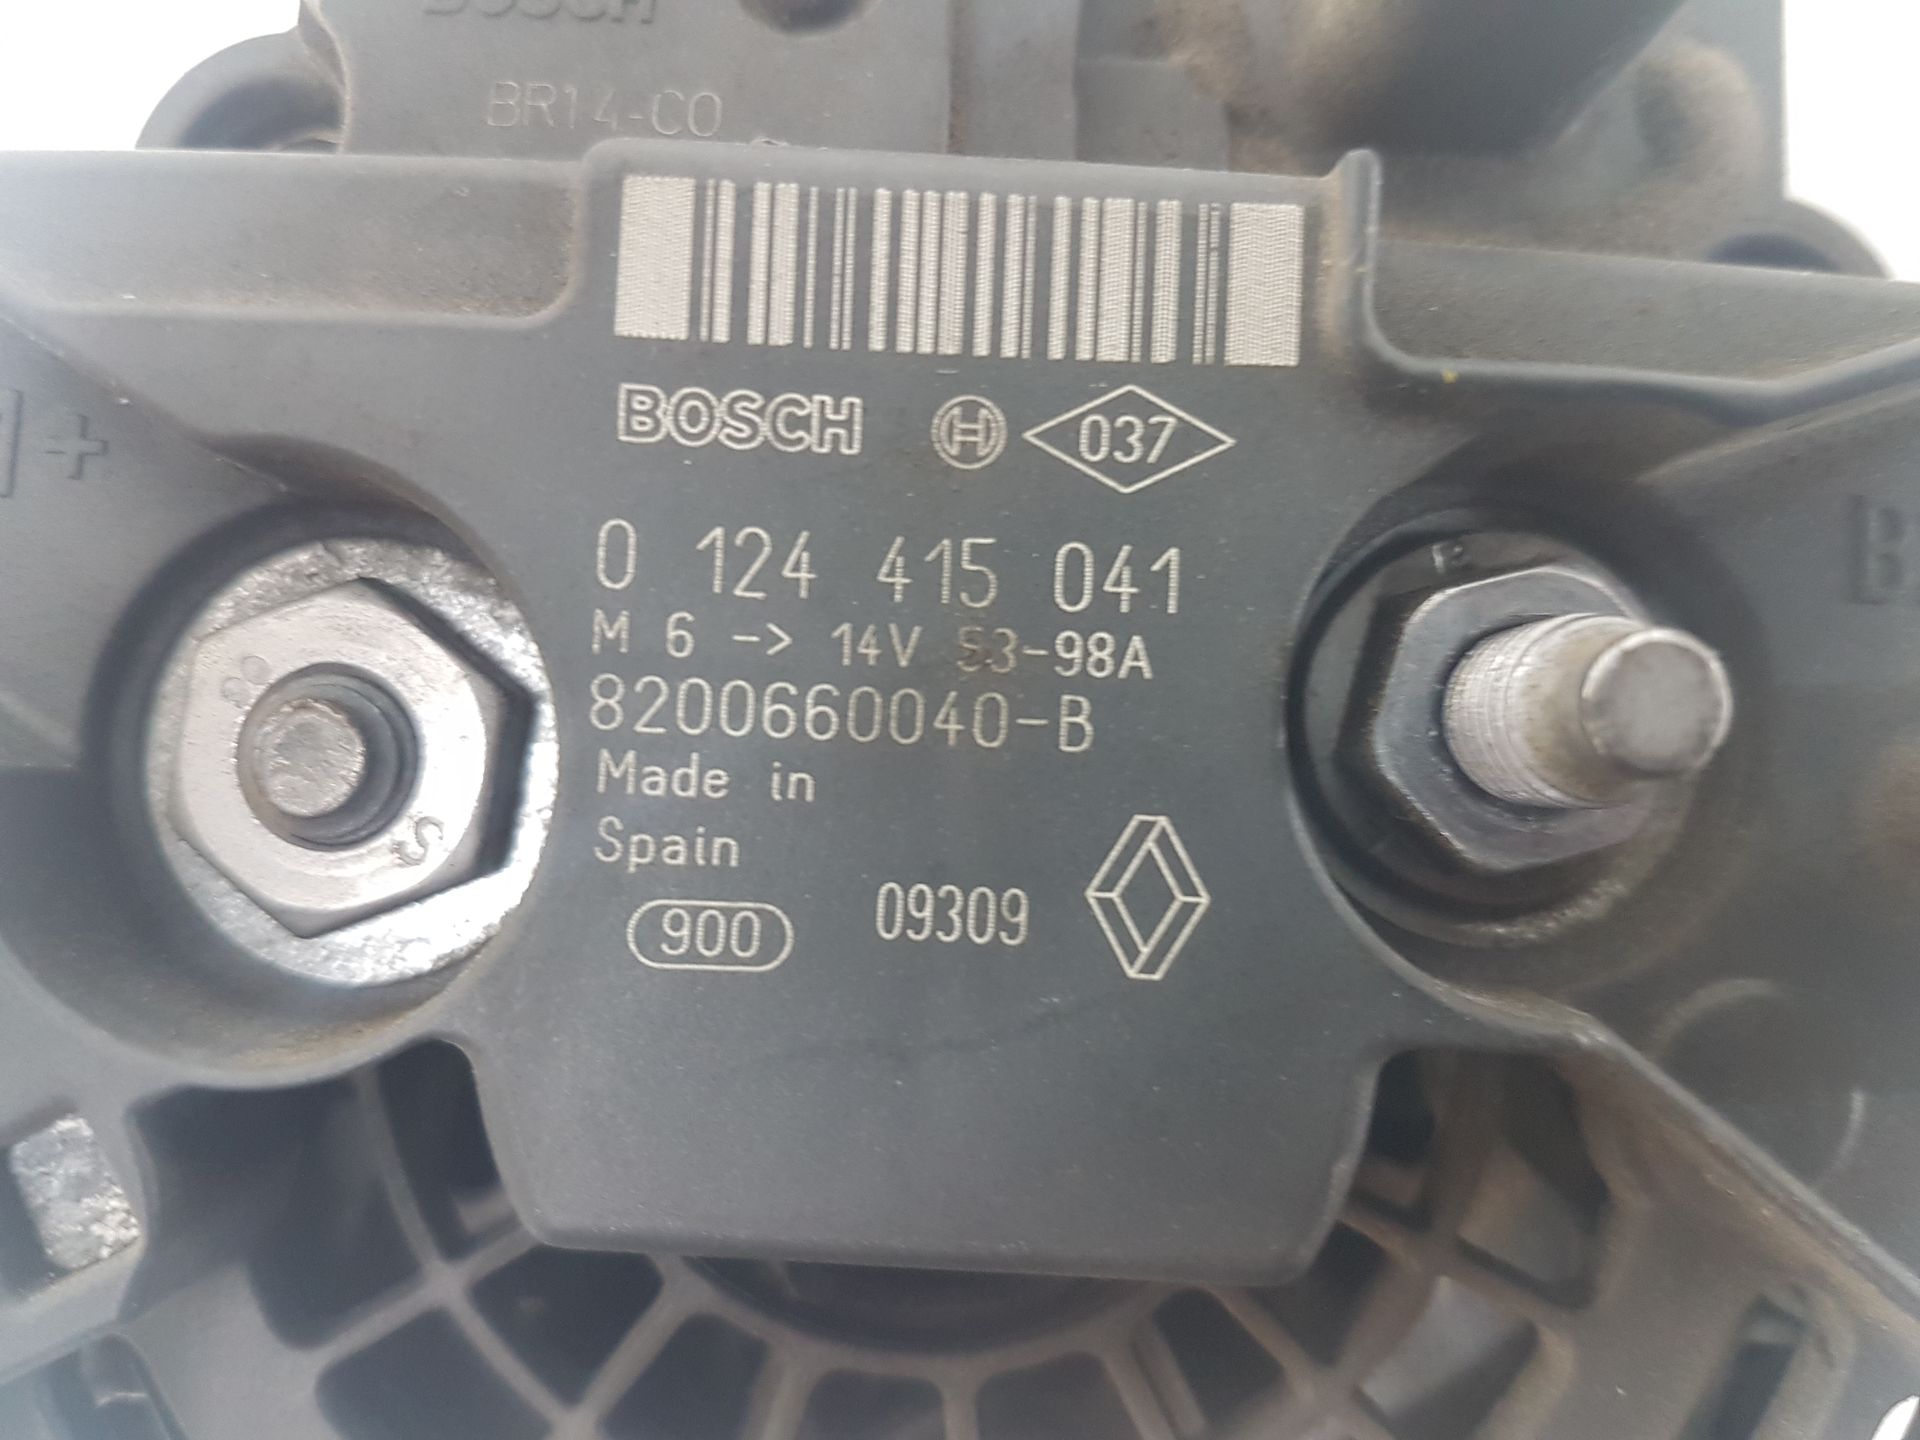 Dacia Sandero I Lichtmaschine Generator 98A 8200660040 0124415041 Bj09 1,6 64kw